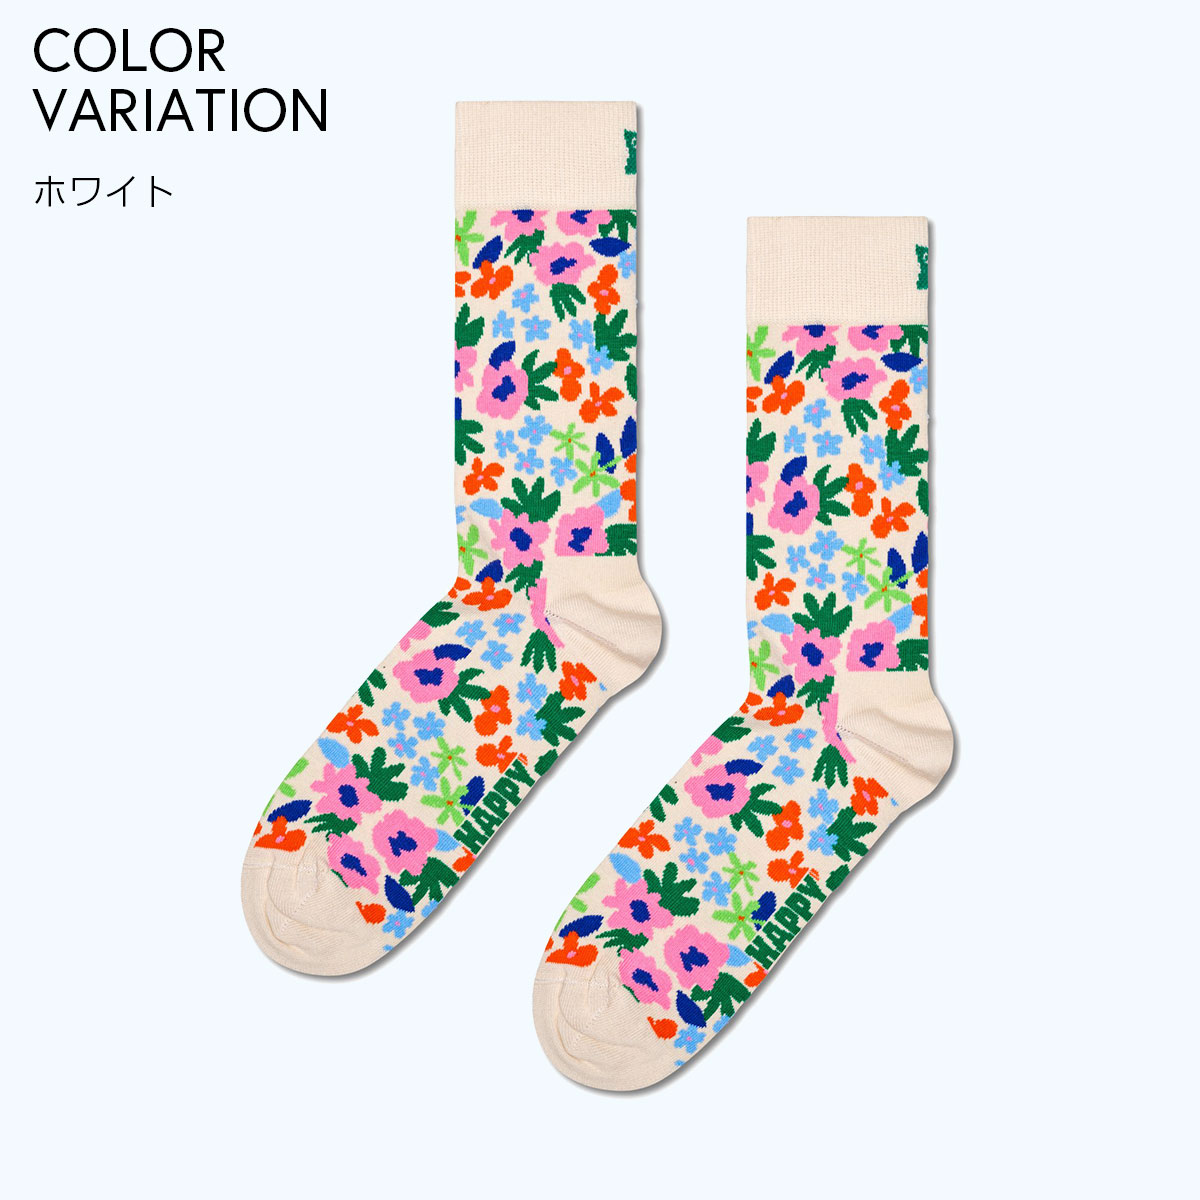 【24SS】Happy Socks ハッピーソックス Flower ( フラワー ) クルー丈 ソックス ユニセックス メンズ ＆ レディス 10240094